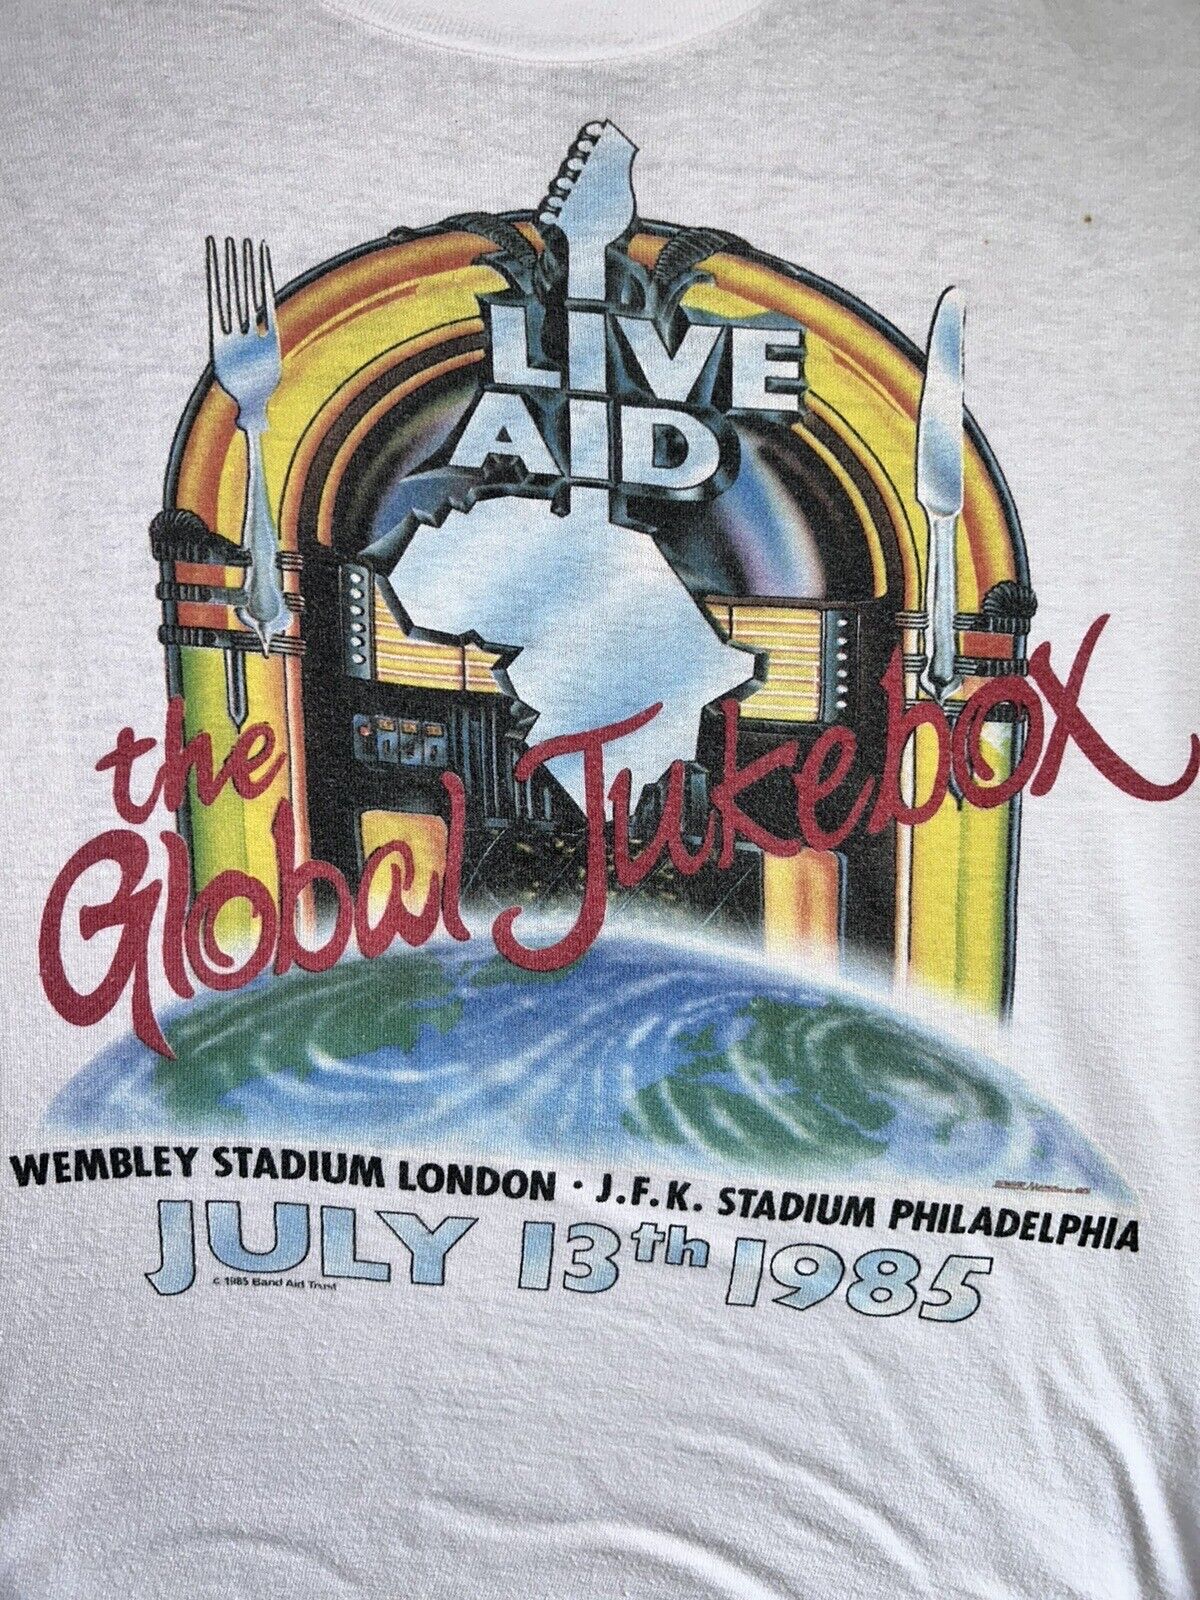 Live Aid Queen Freddie Mercury Shirt Original Band Aid Trust Wembley Stad 1985